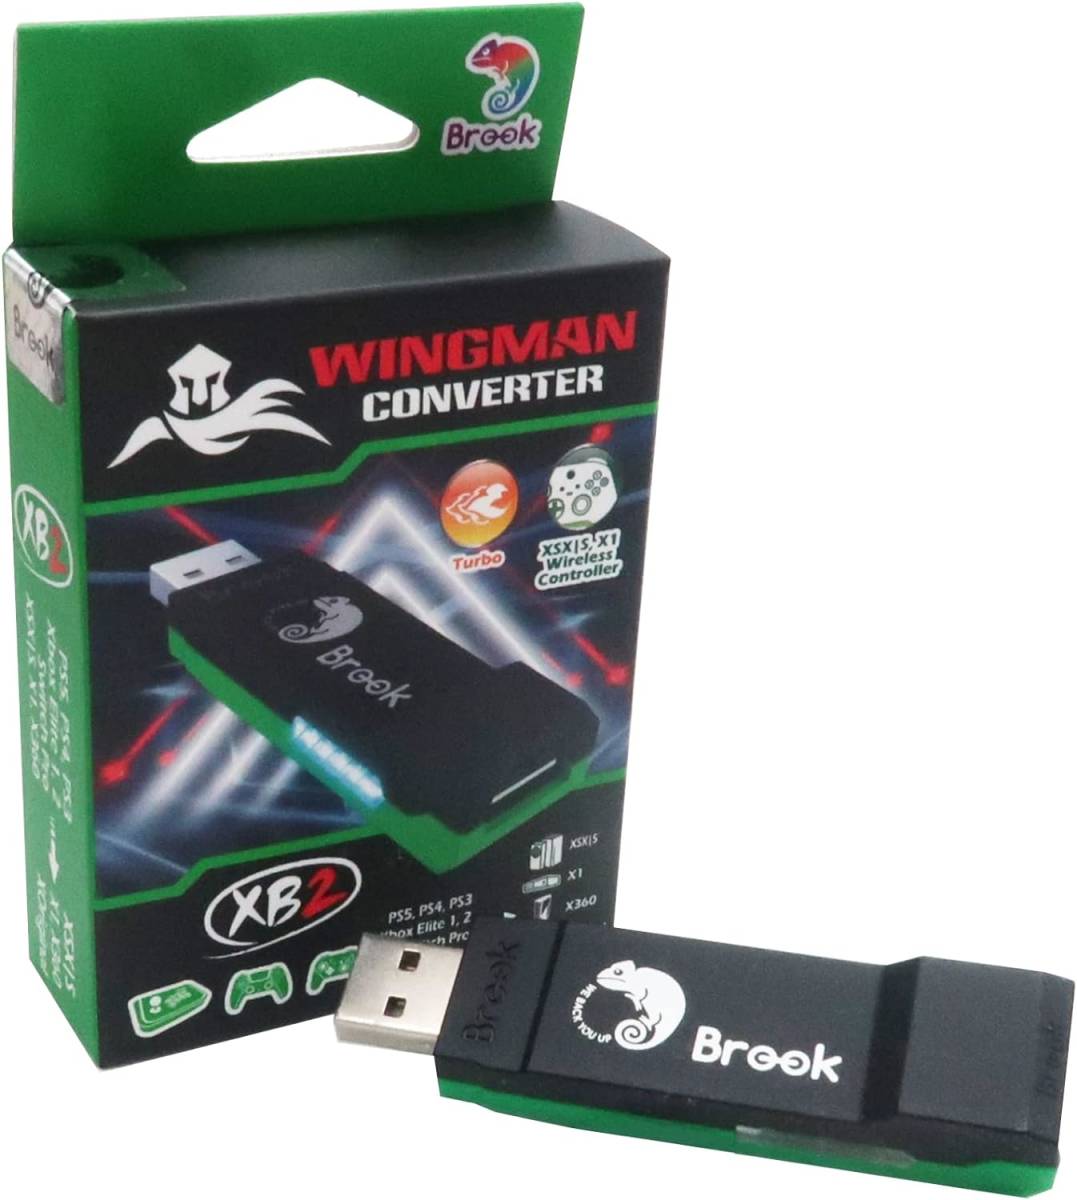 Mcbazel Brook Wingman XB2 ウィングマンXB2 コンバーター PS5/PS4/PS3/Switch Pro